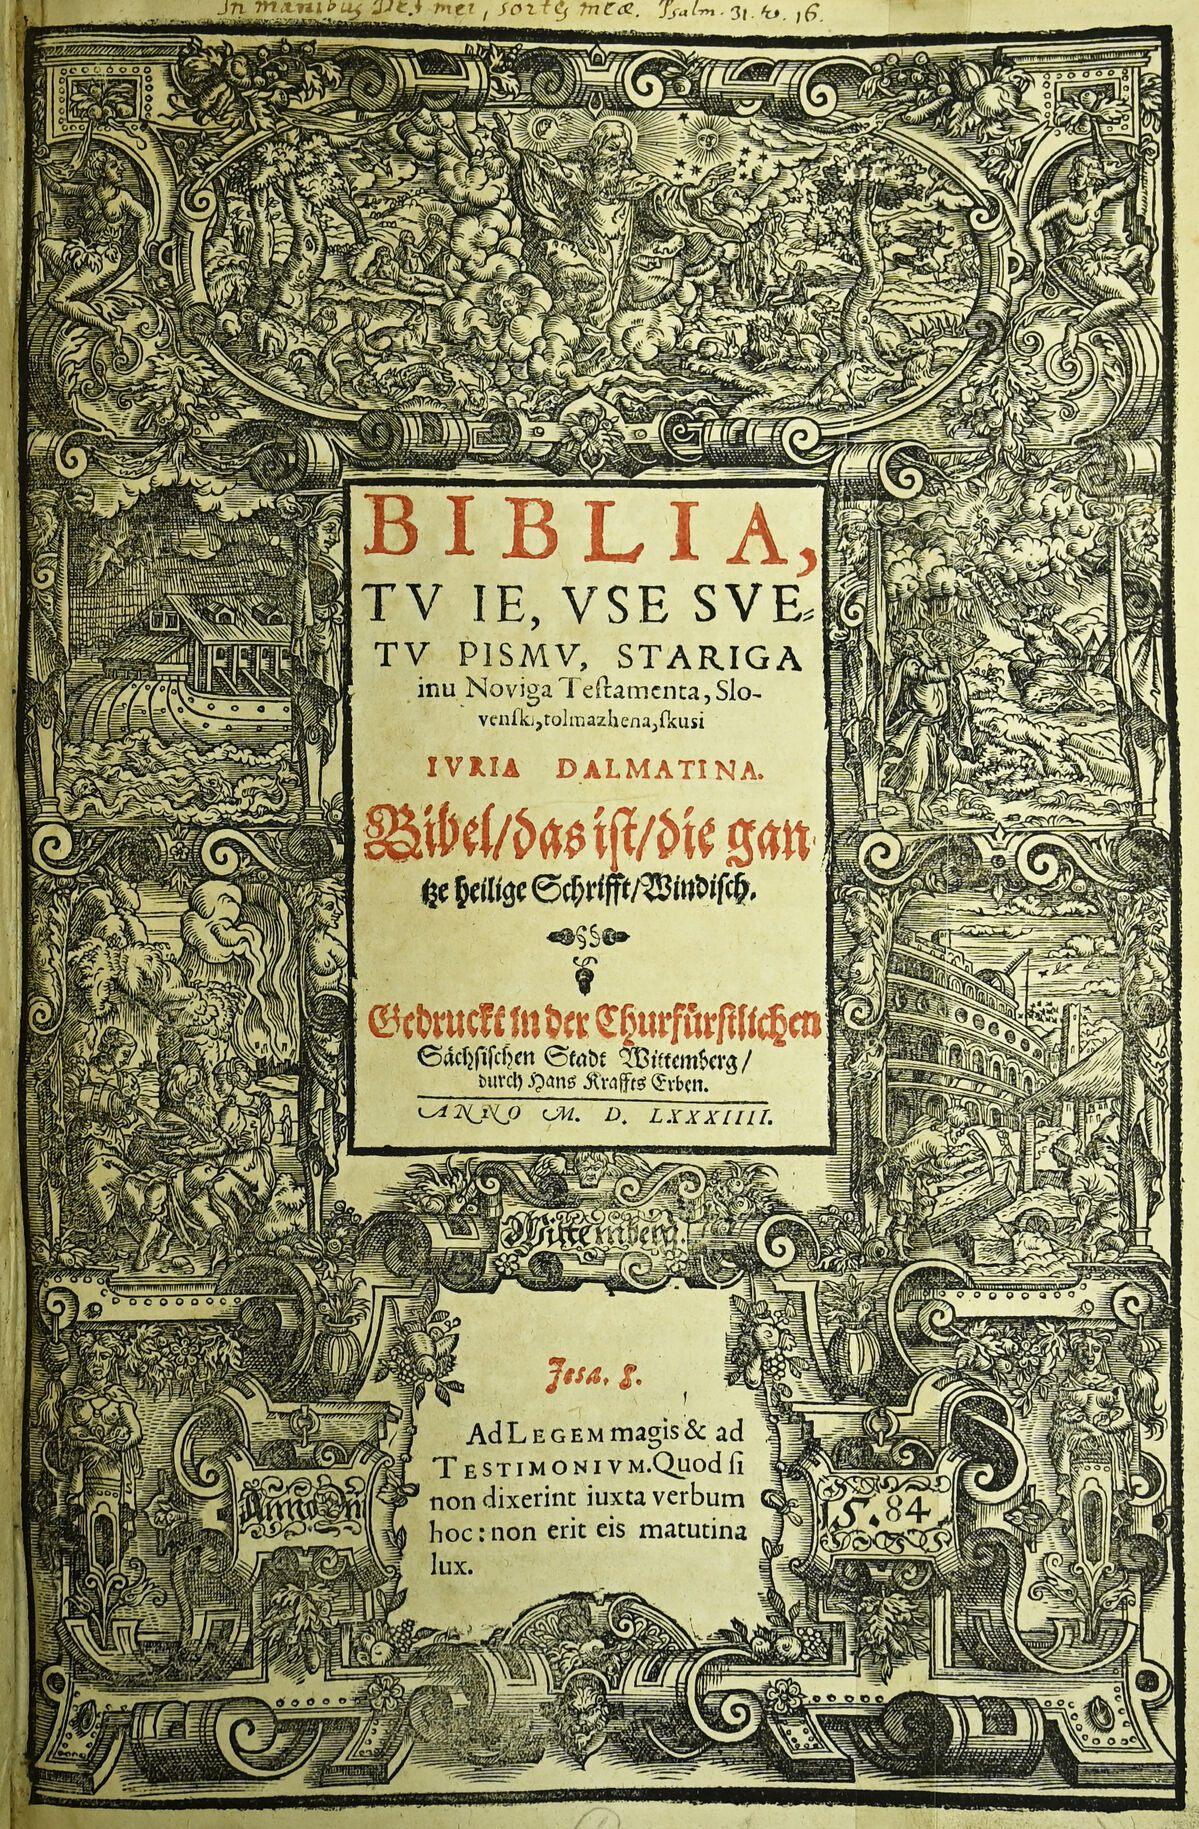 Bibilia, tu je vse svetu pismu stariga inu noviga testamenta, slovenski tolmačena skuzi Jurija Dalmatina, Wittenberg 1584, Görlitzer Sammlungen